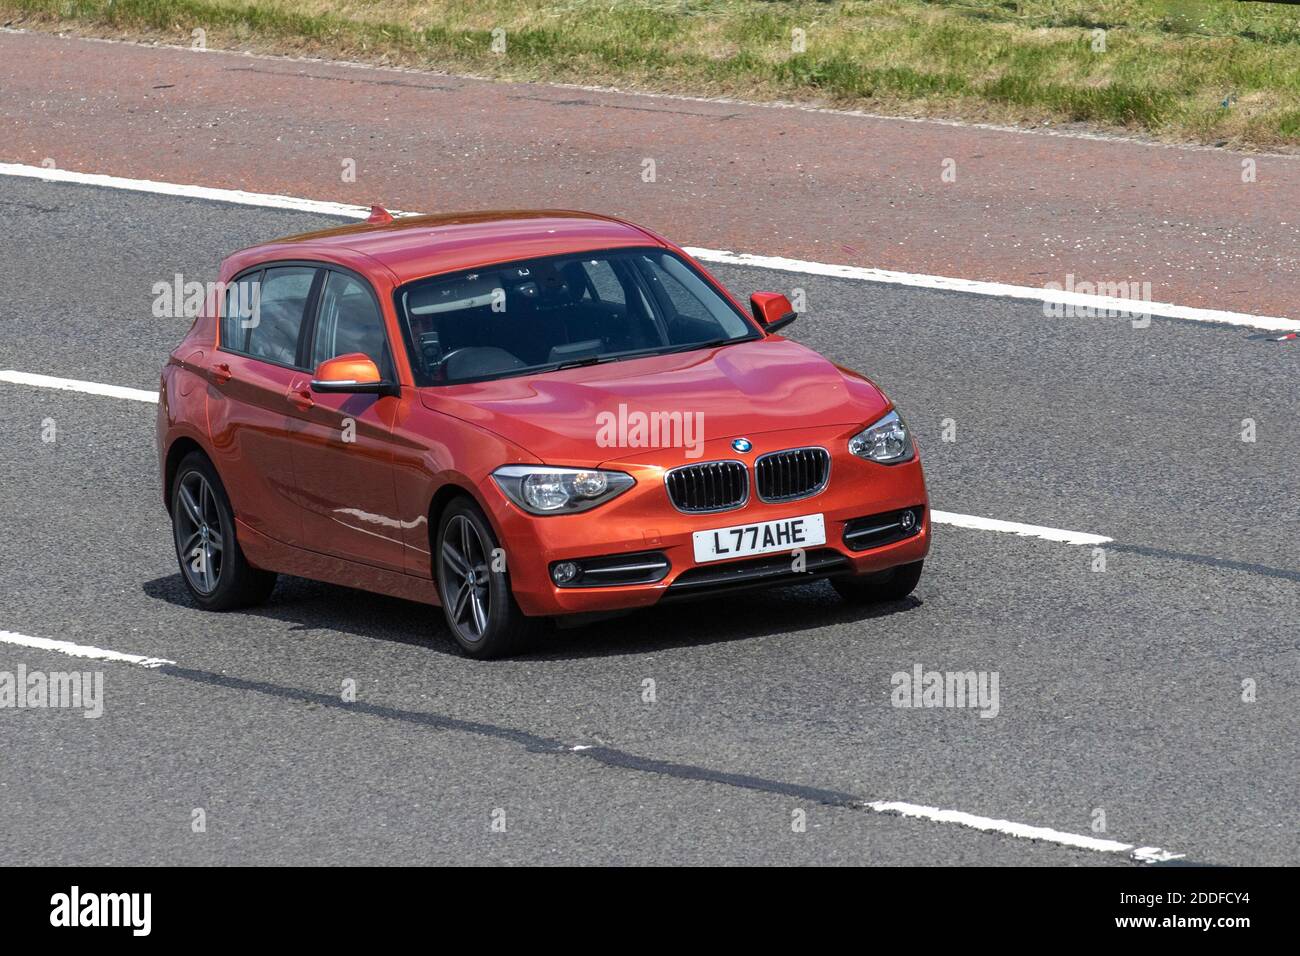 2014 orange BMW 116D Sport; Vehicular traffic, moving vehicles, cars, vehicle driving on UK roads, motors, motoring on the M6 motorway highway UK road network. Stock Photo